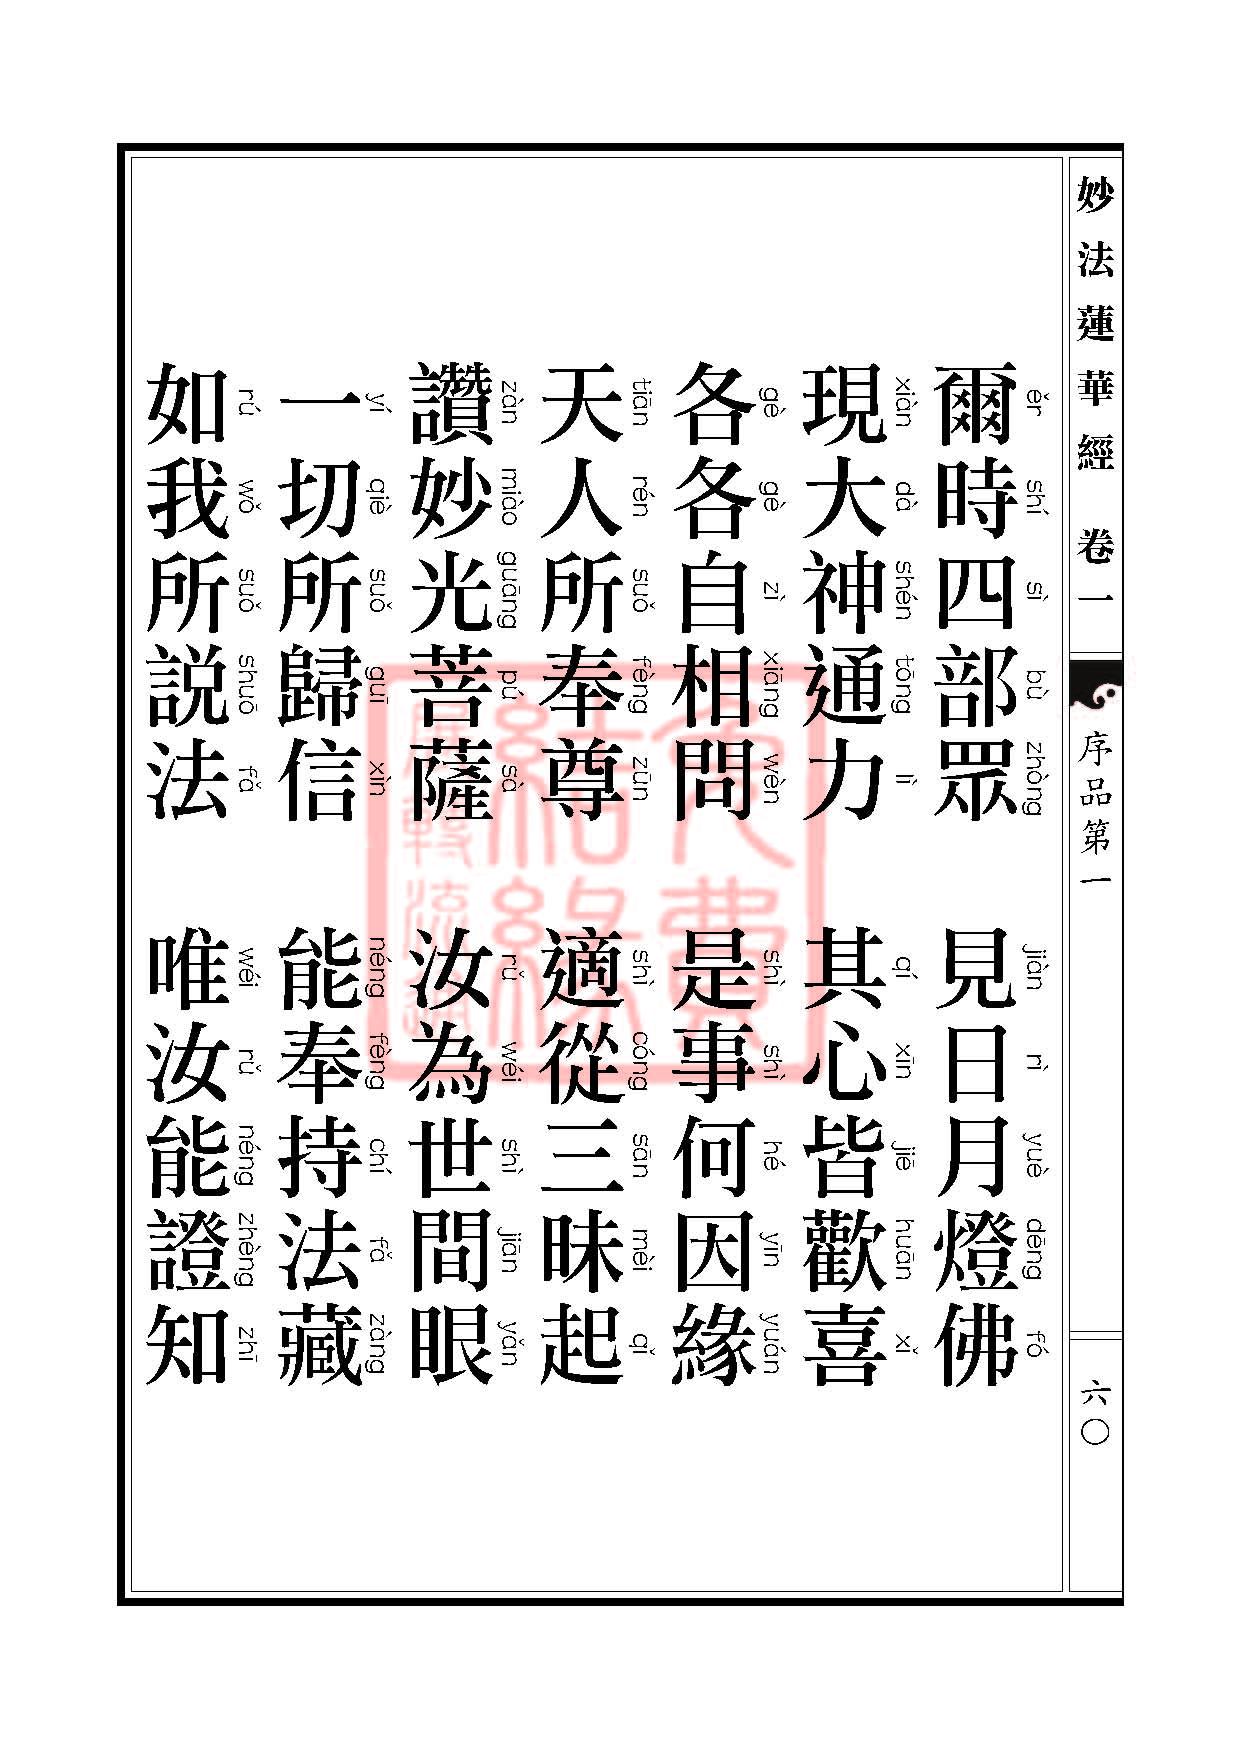 Book_FHJ_HK-A6-PY_Web_页面_060.jpg